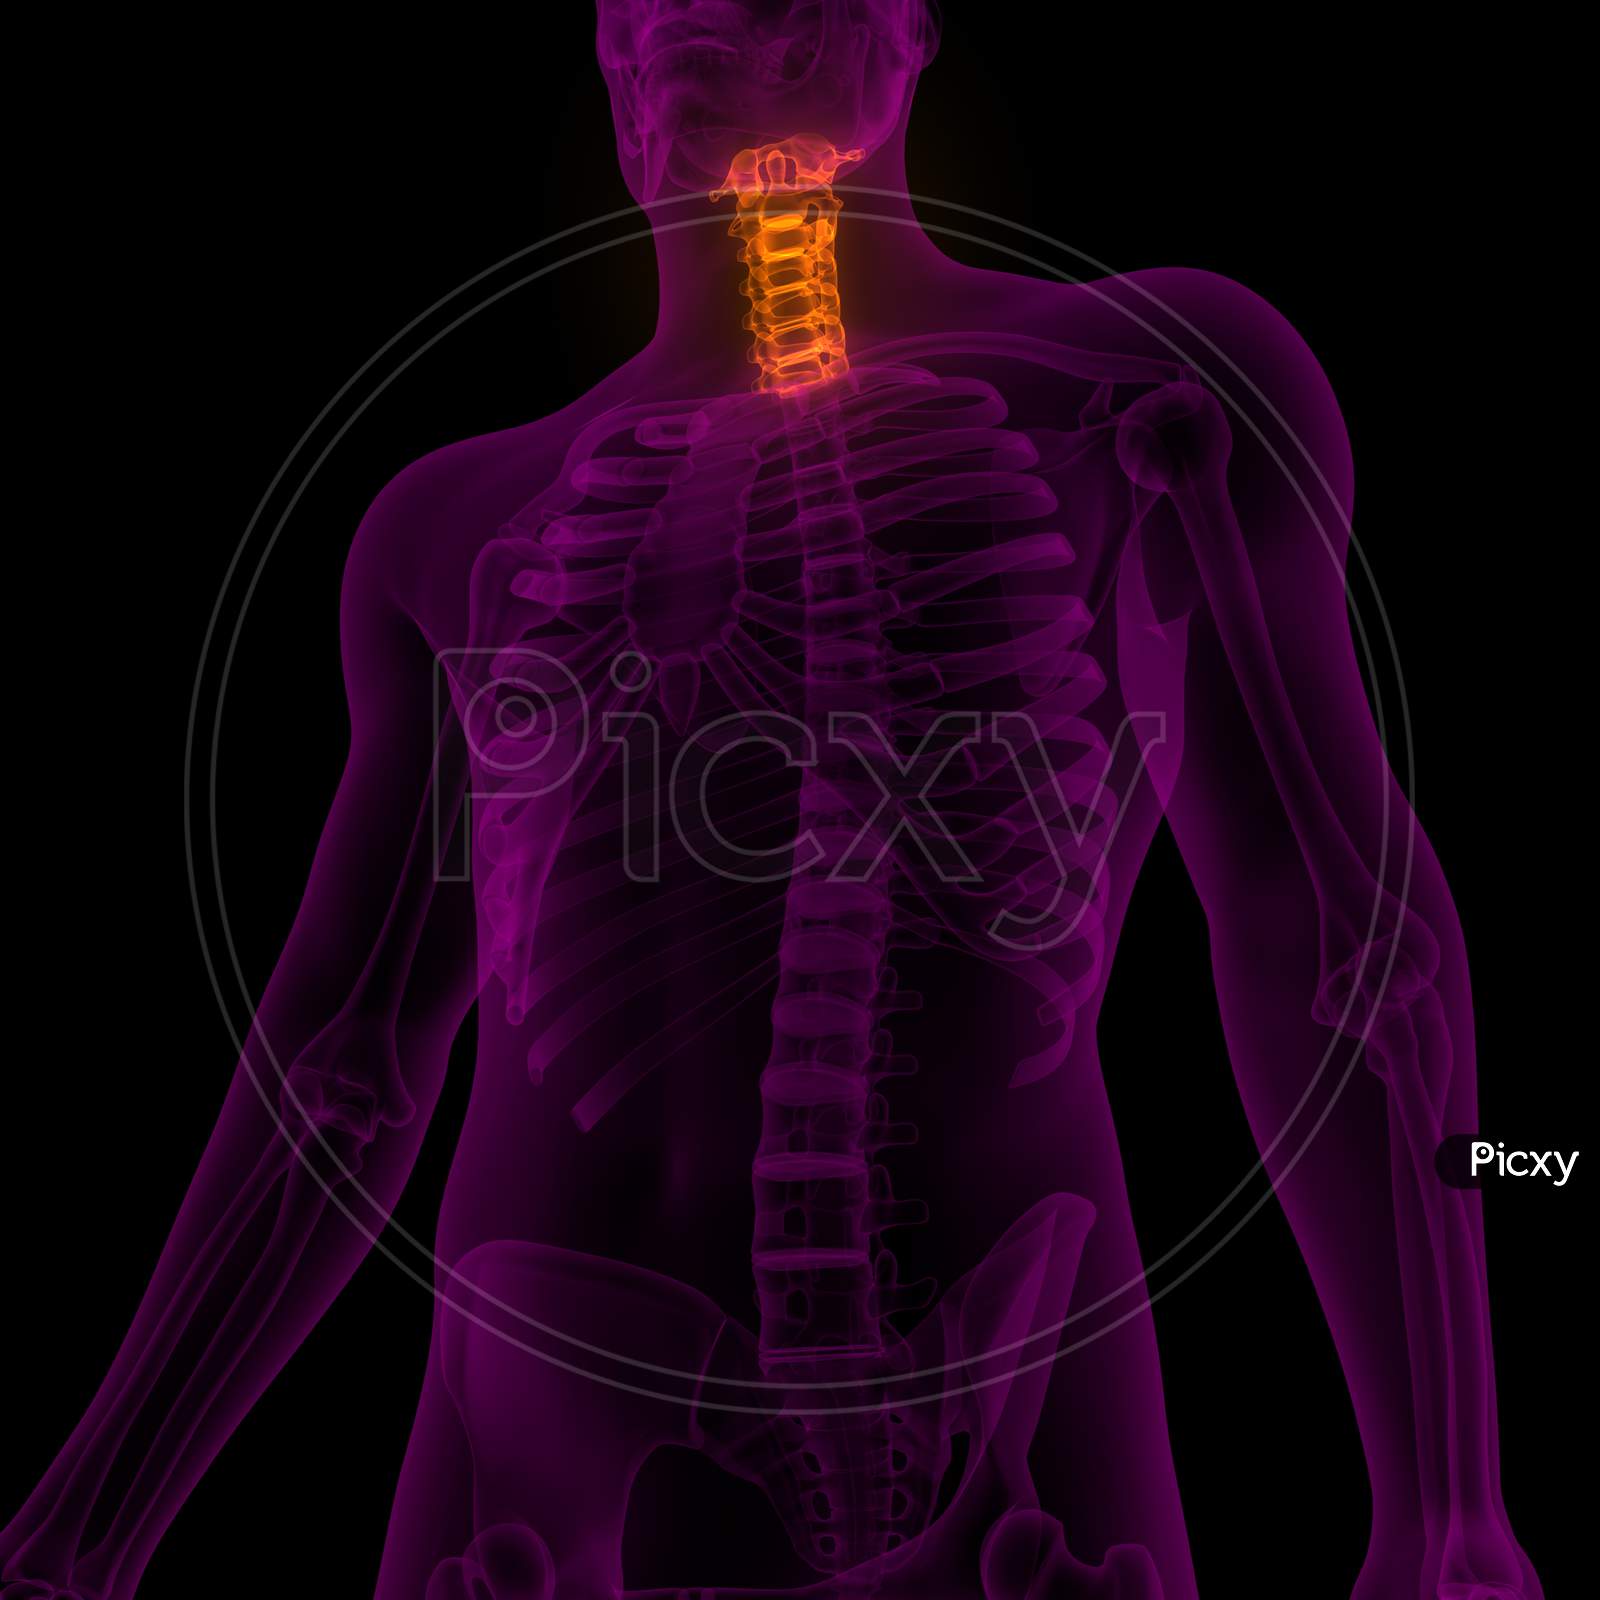 Vertebral Column Cervical Vertebrae of Human Skeleton Anatomy X-ray 3D renderin